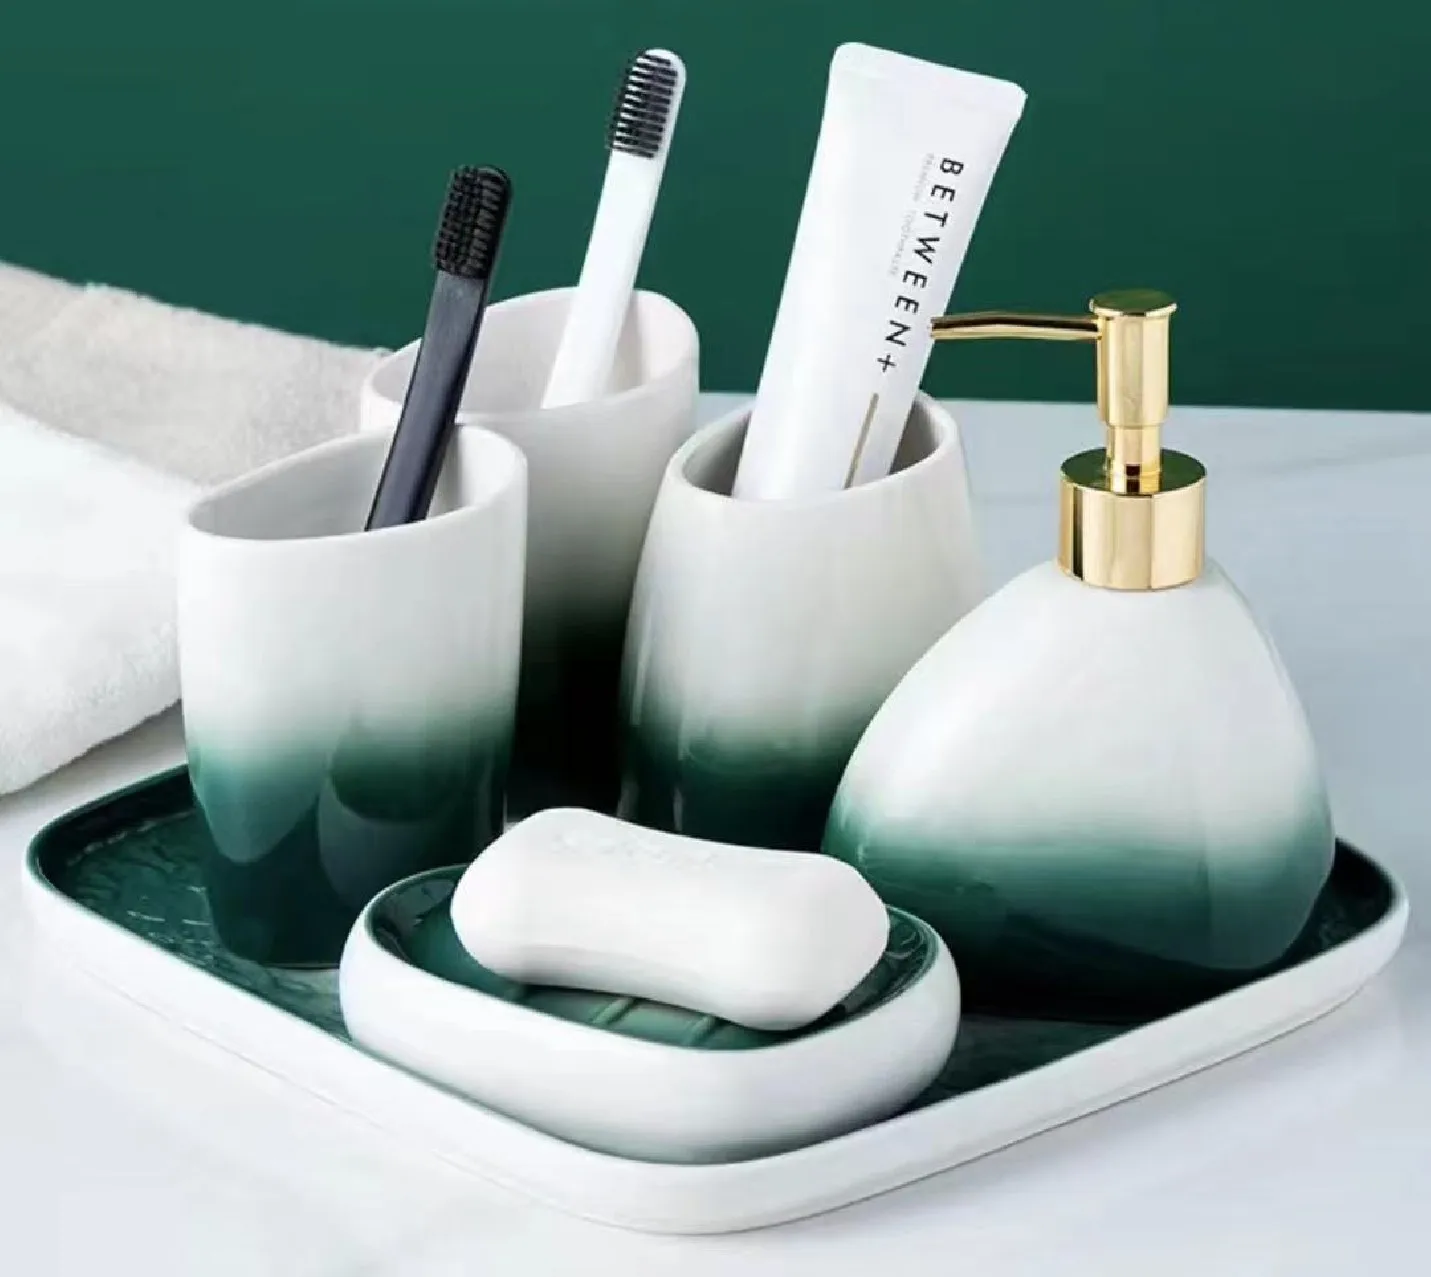 Bathroom Accessories Set Toothbrush Holder Soap Dish Dispenser Tumbler Tray Gradual Ceramic Bathroom Supplies Appliances